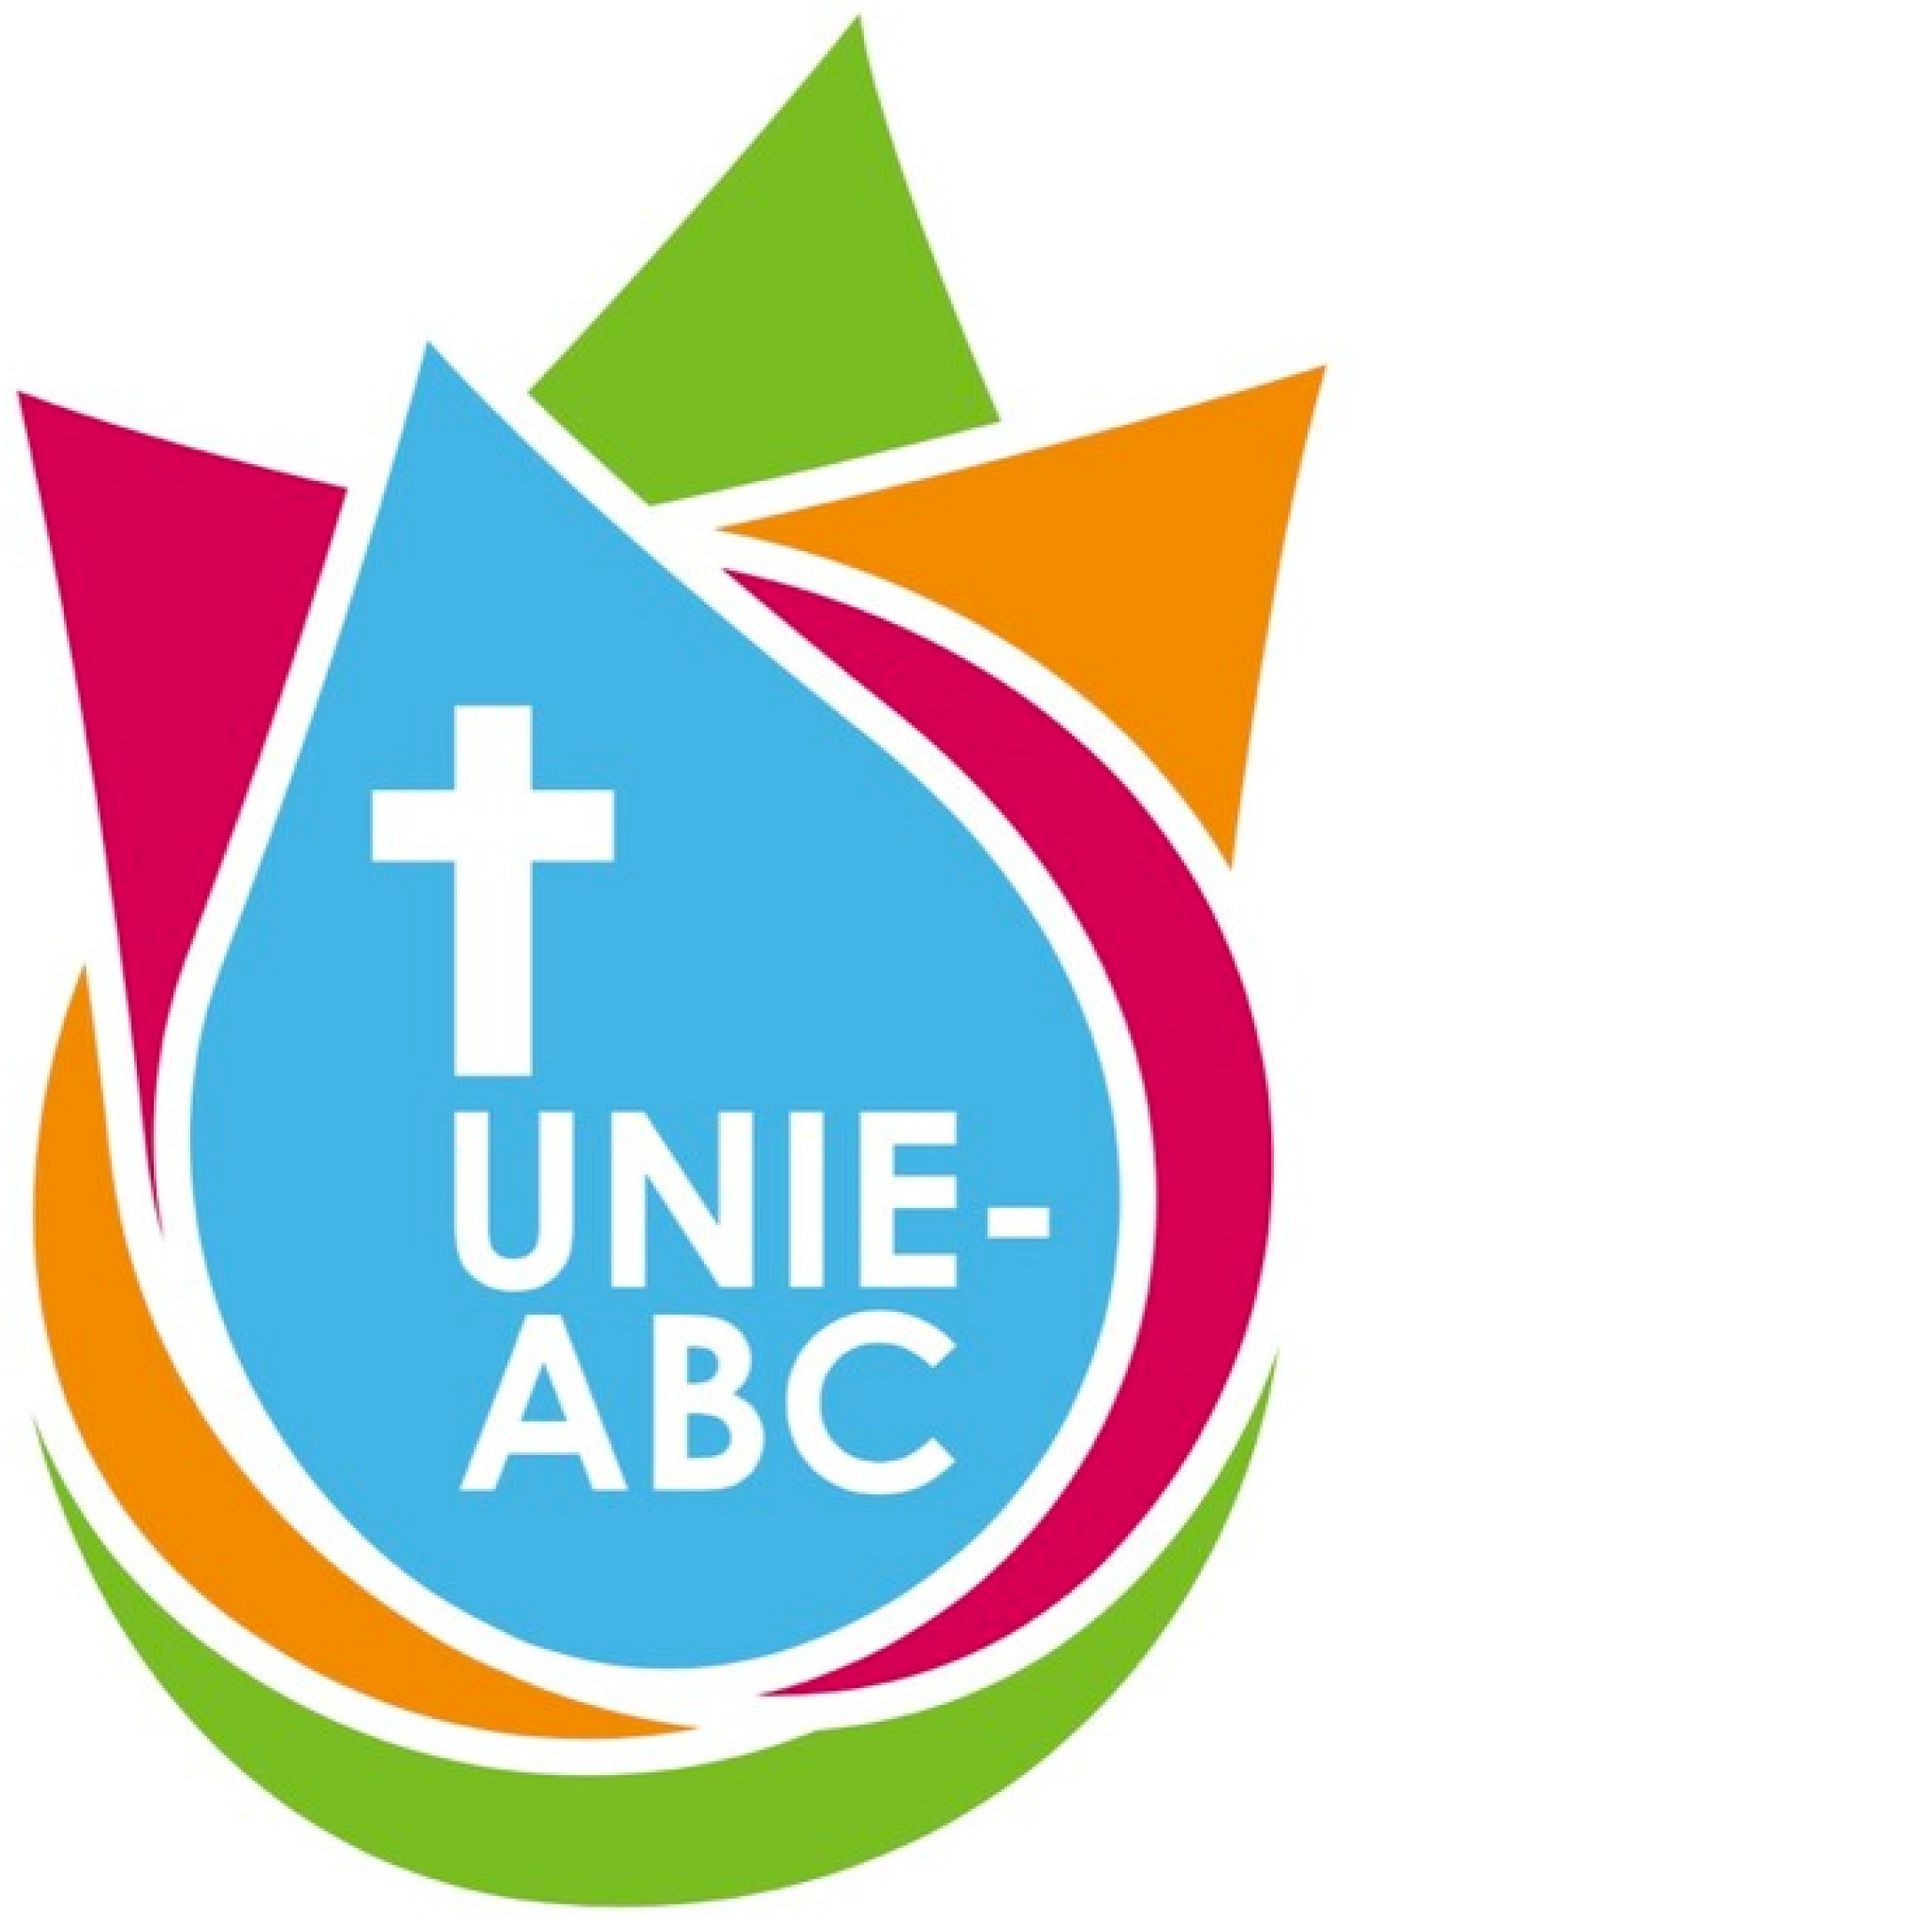 unie abc logo